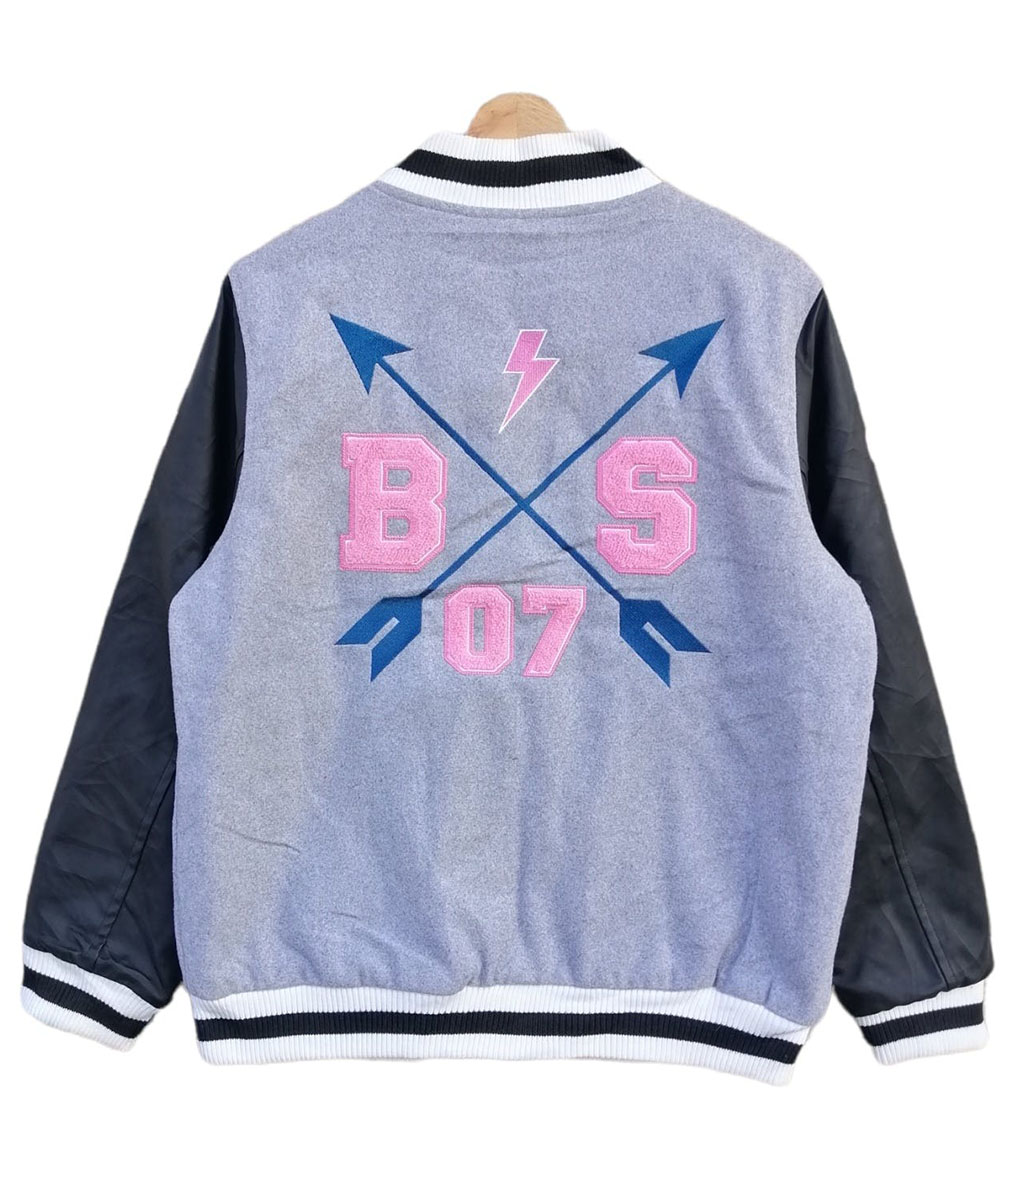 BTS 07 Grey Varsity Jacket (1)